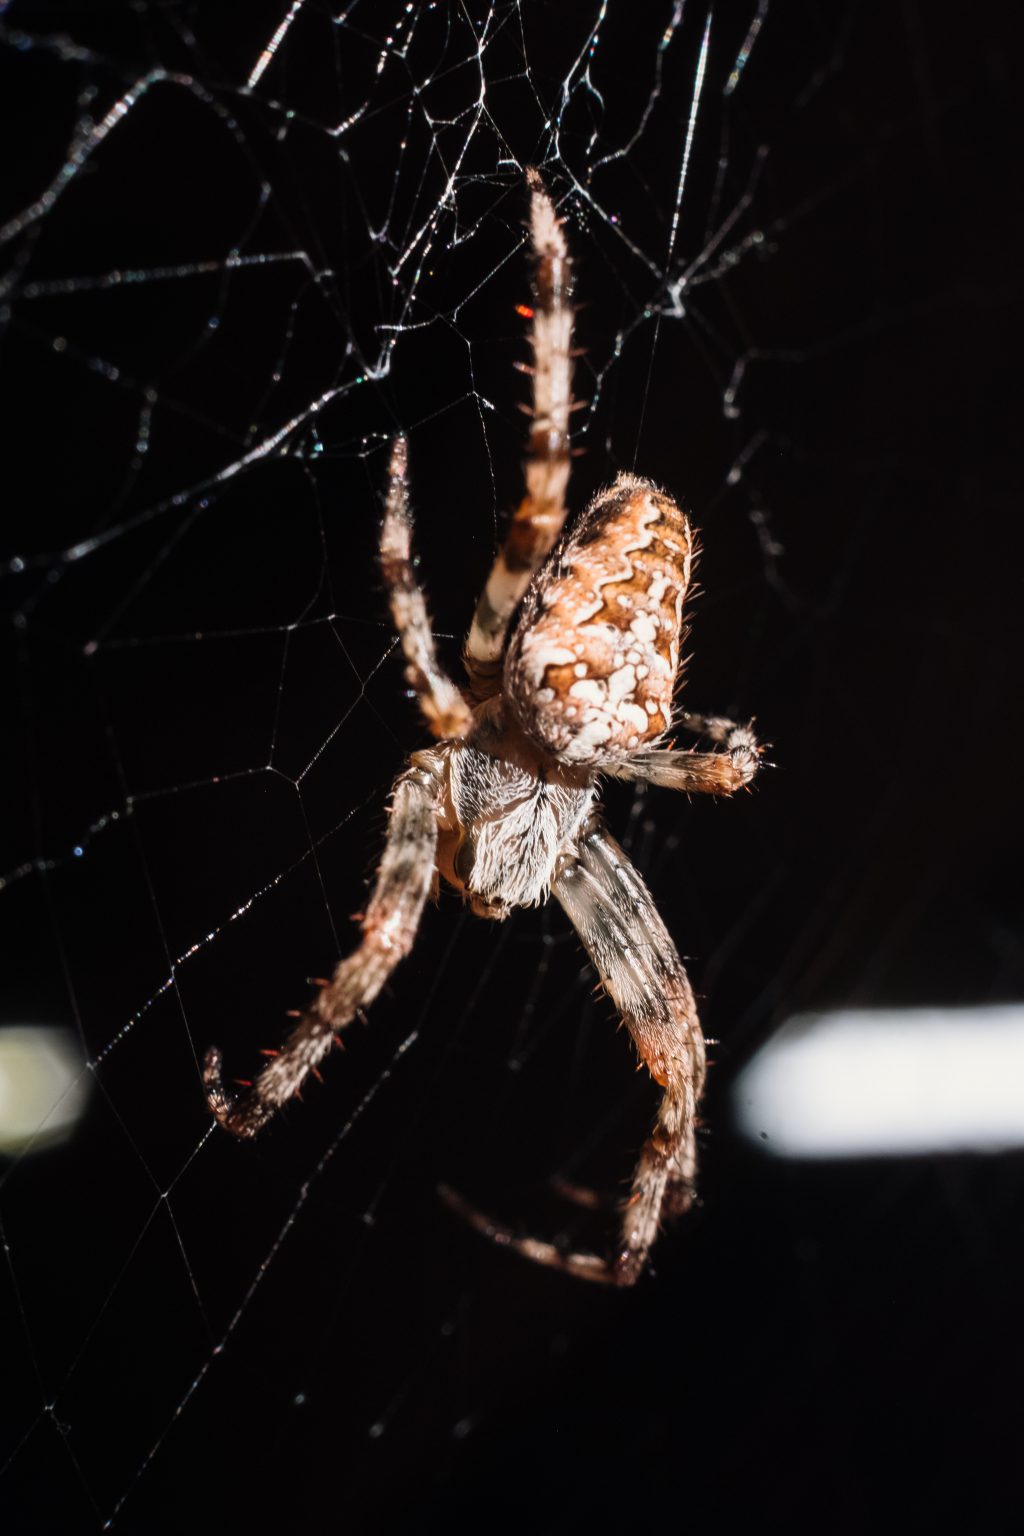 Spider on its web closeup - free stock photo